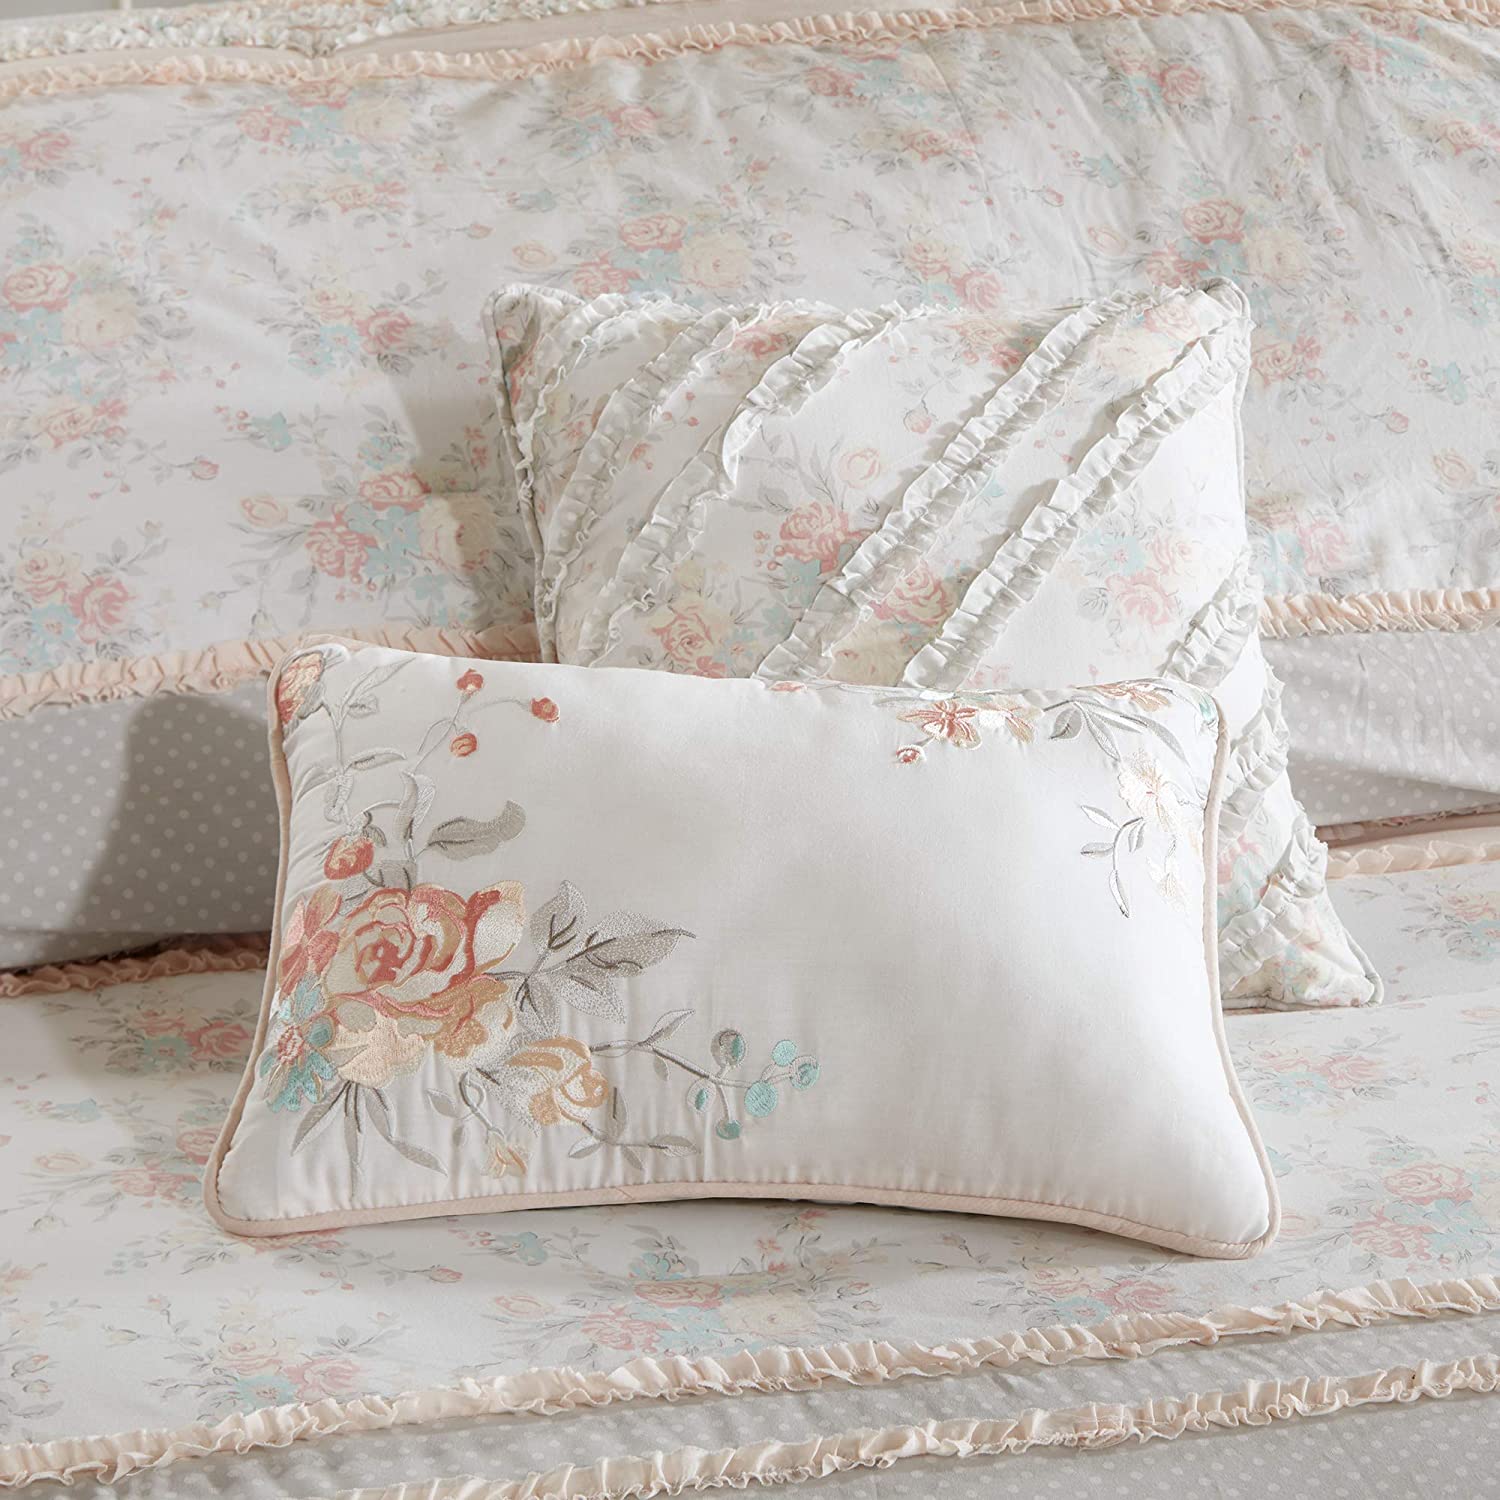 Madison Park Serendipity Duvet Cover Cal King Size - Coral, Floral Duvet Cover Set ‚Äì 9 Piece ‚Äì 100% Cotton Light Weight Bed Comforter Covers